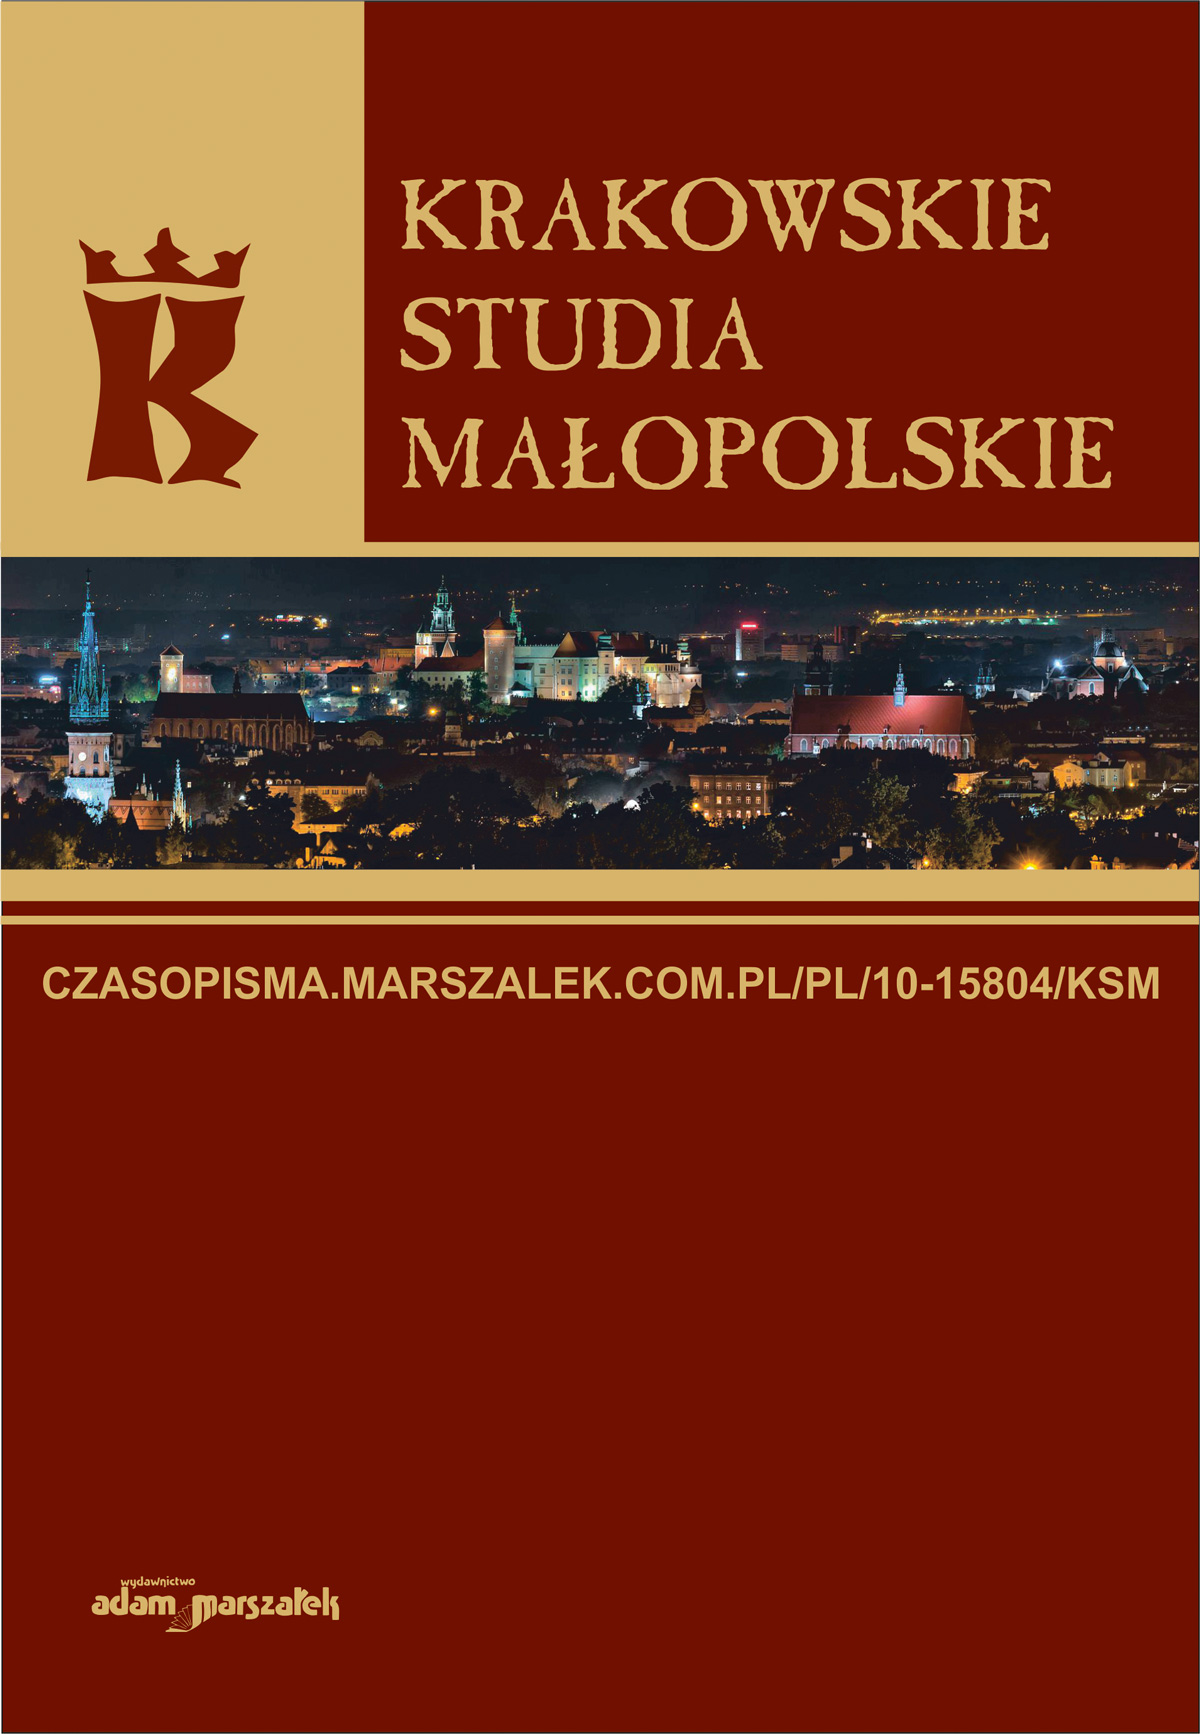 Cracow Lesser Poland Studies Cover Image